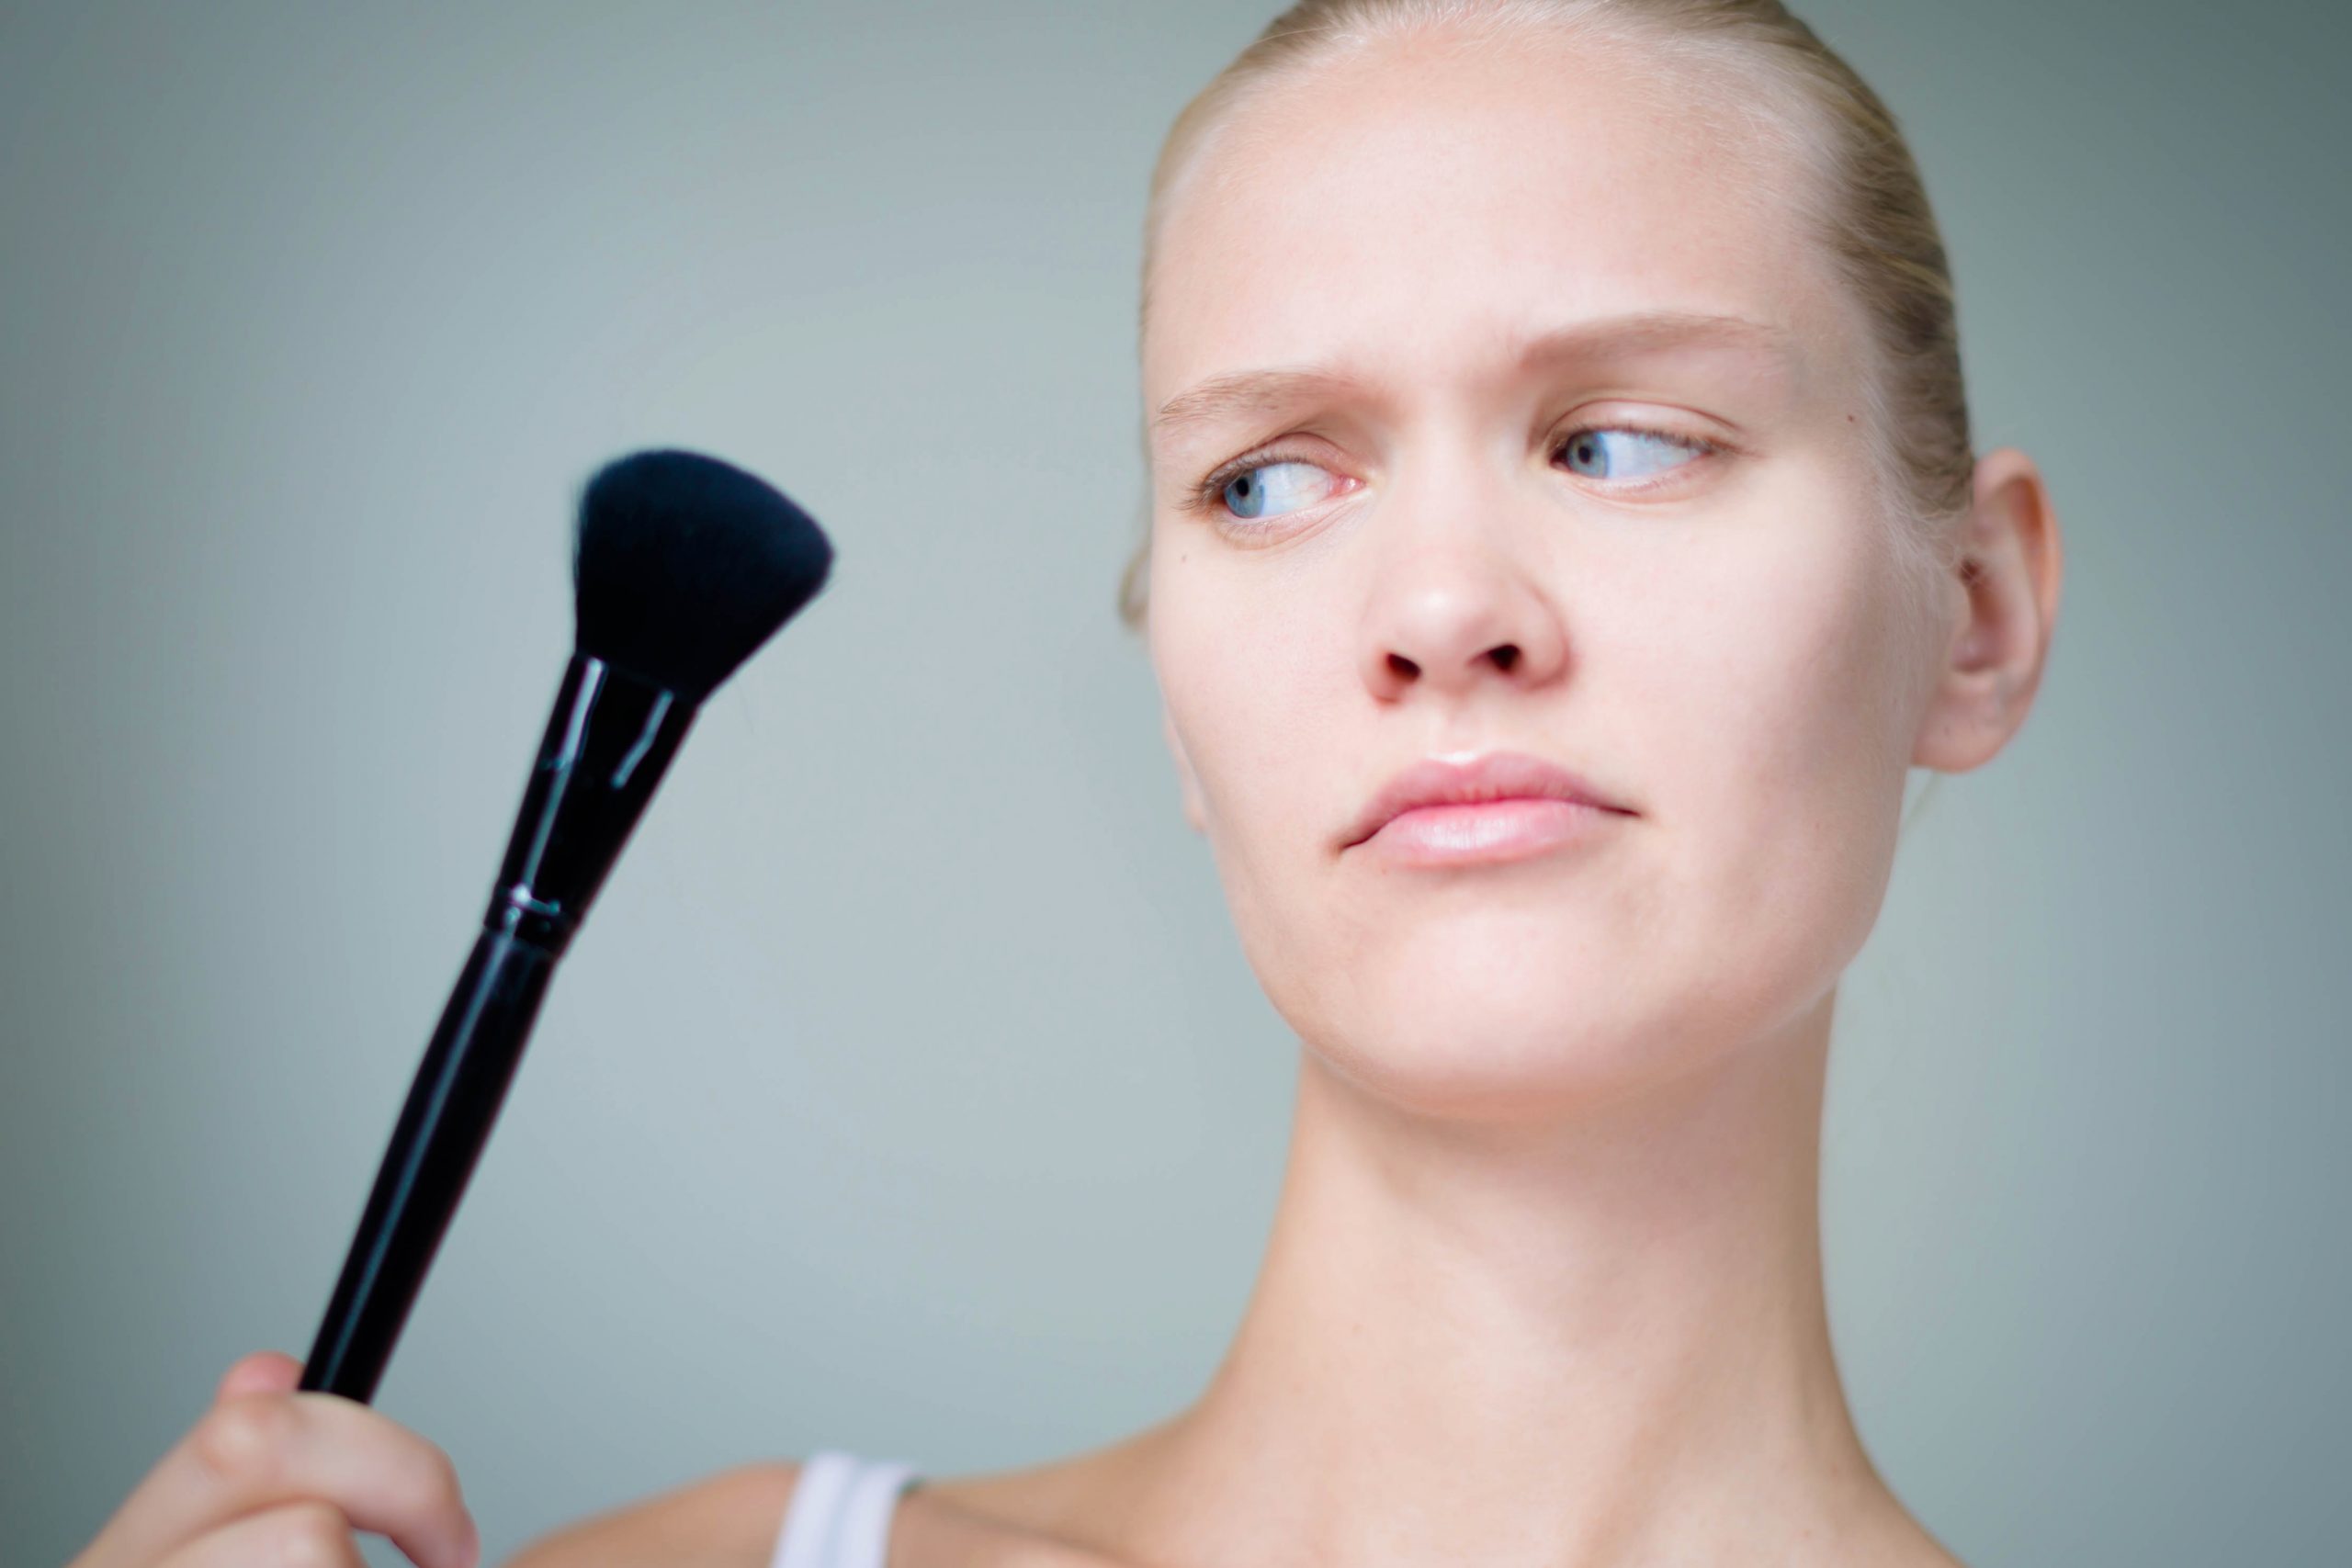 Woman looking suspiciously at makeup brush that may be dirty